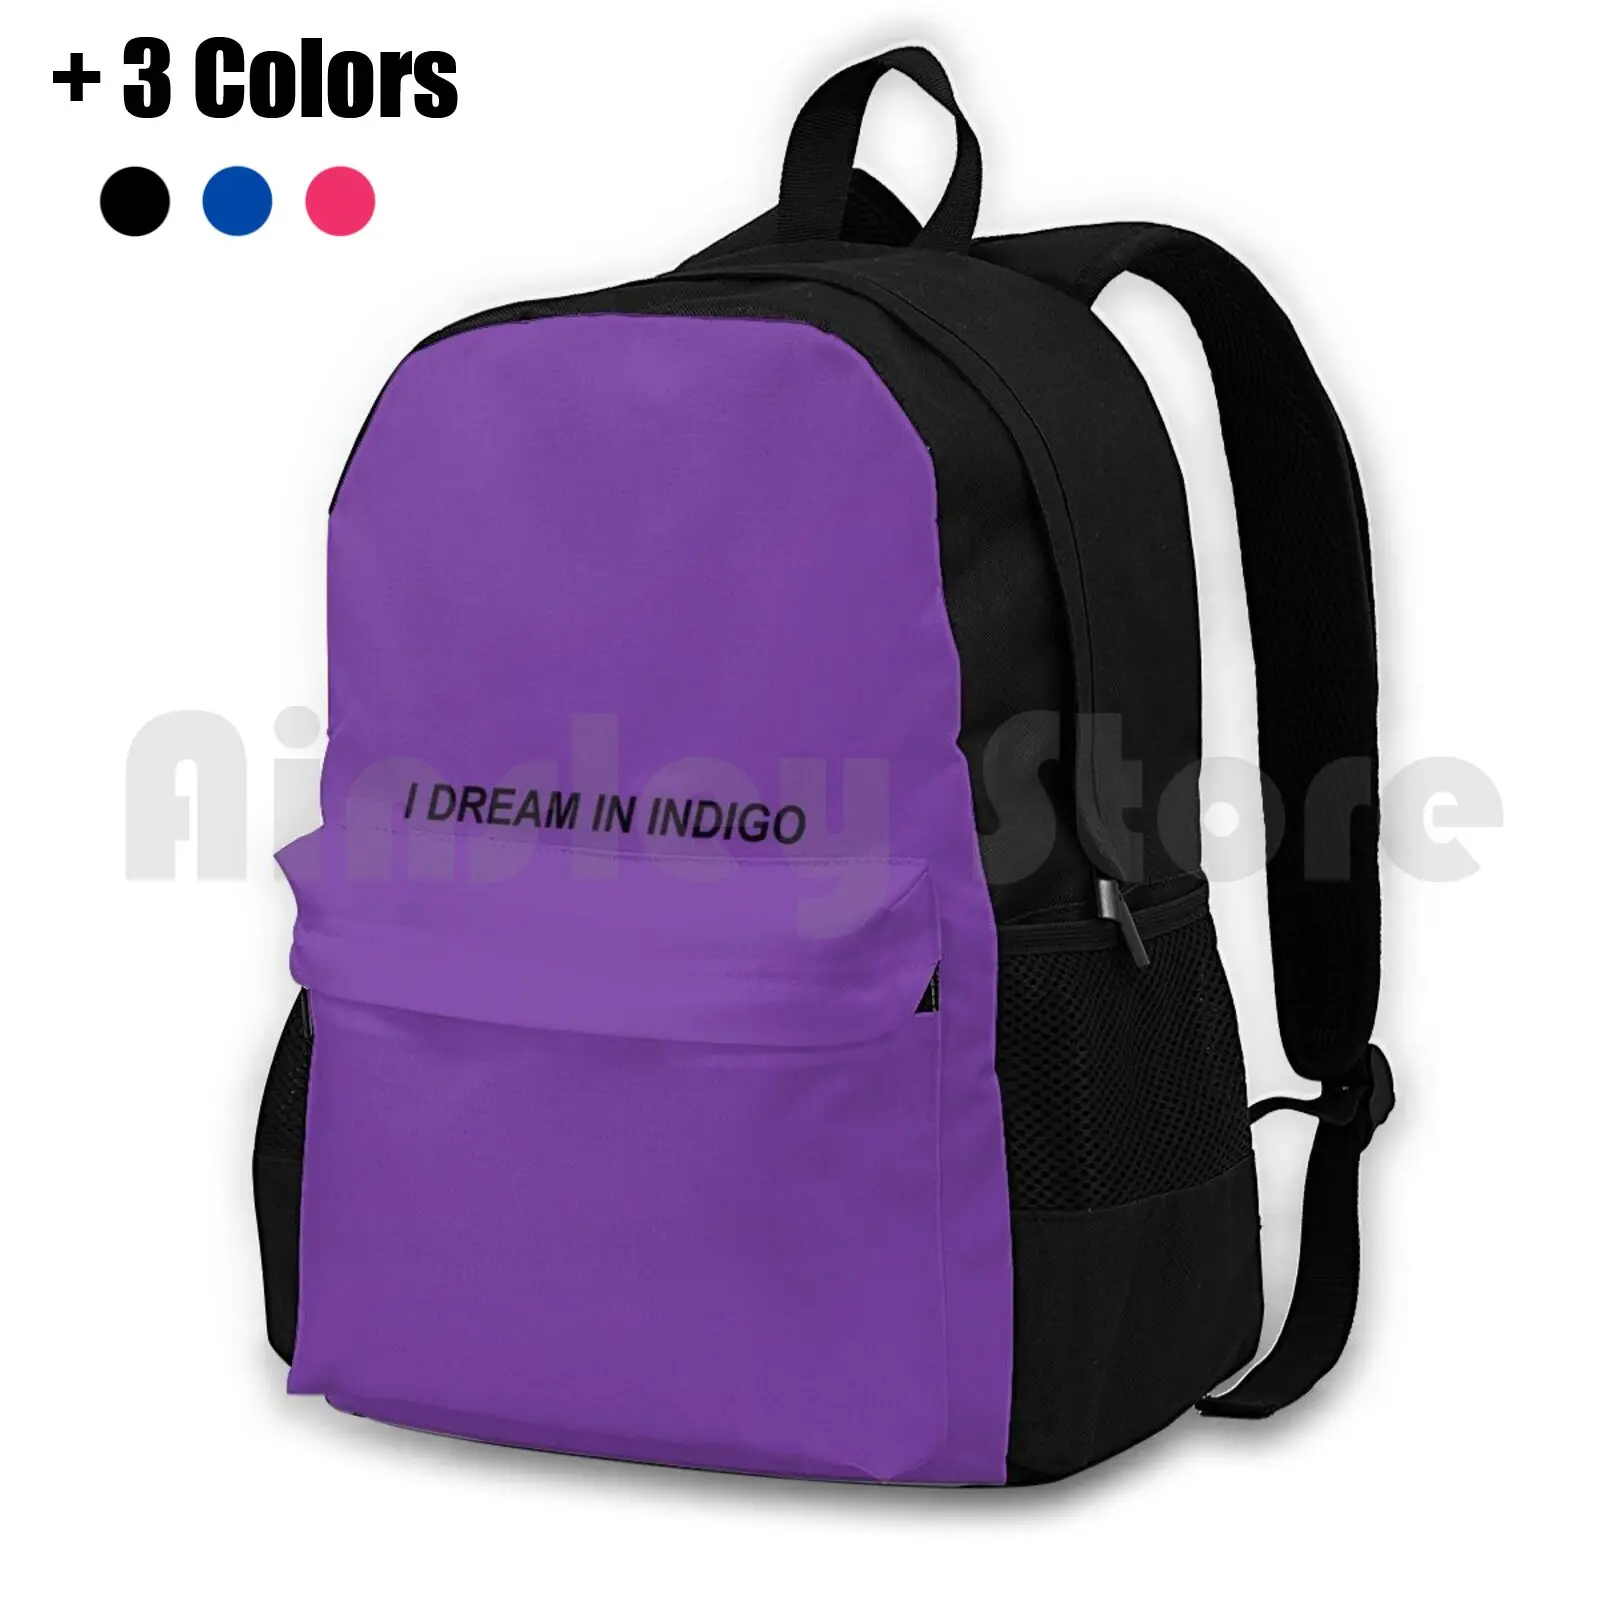 

I Dream In Indigo' Outdoor Hiking Backpack Riding Climbing Sports Bag Indigo Chris Brown Team Breezy Top Phone Case Album Song